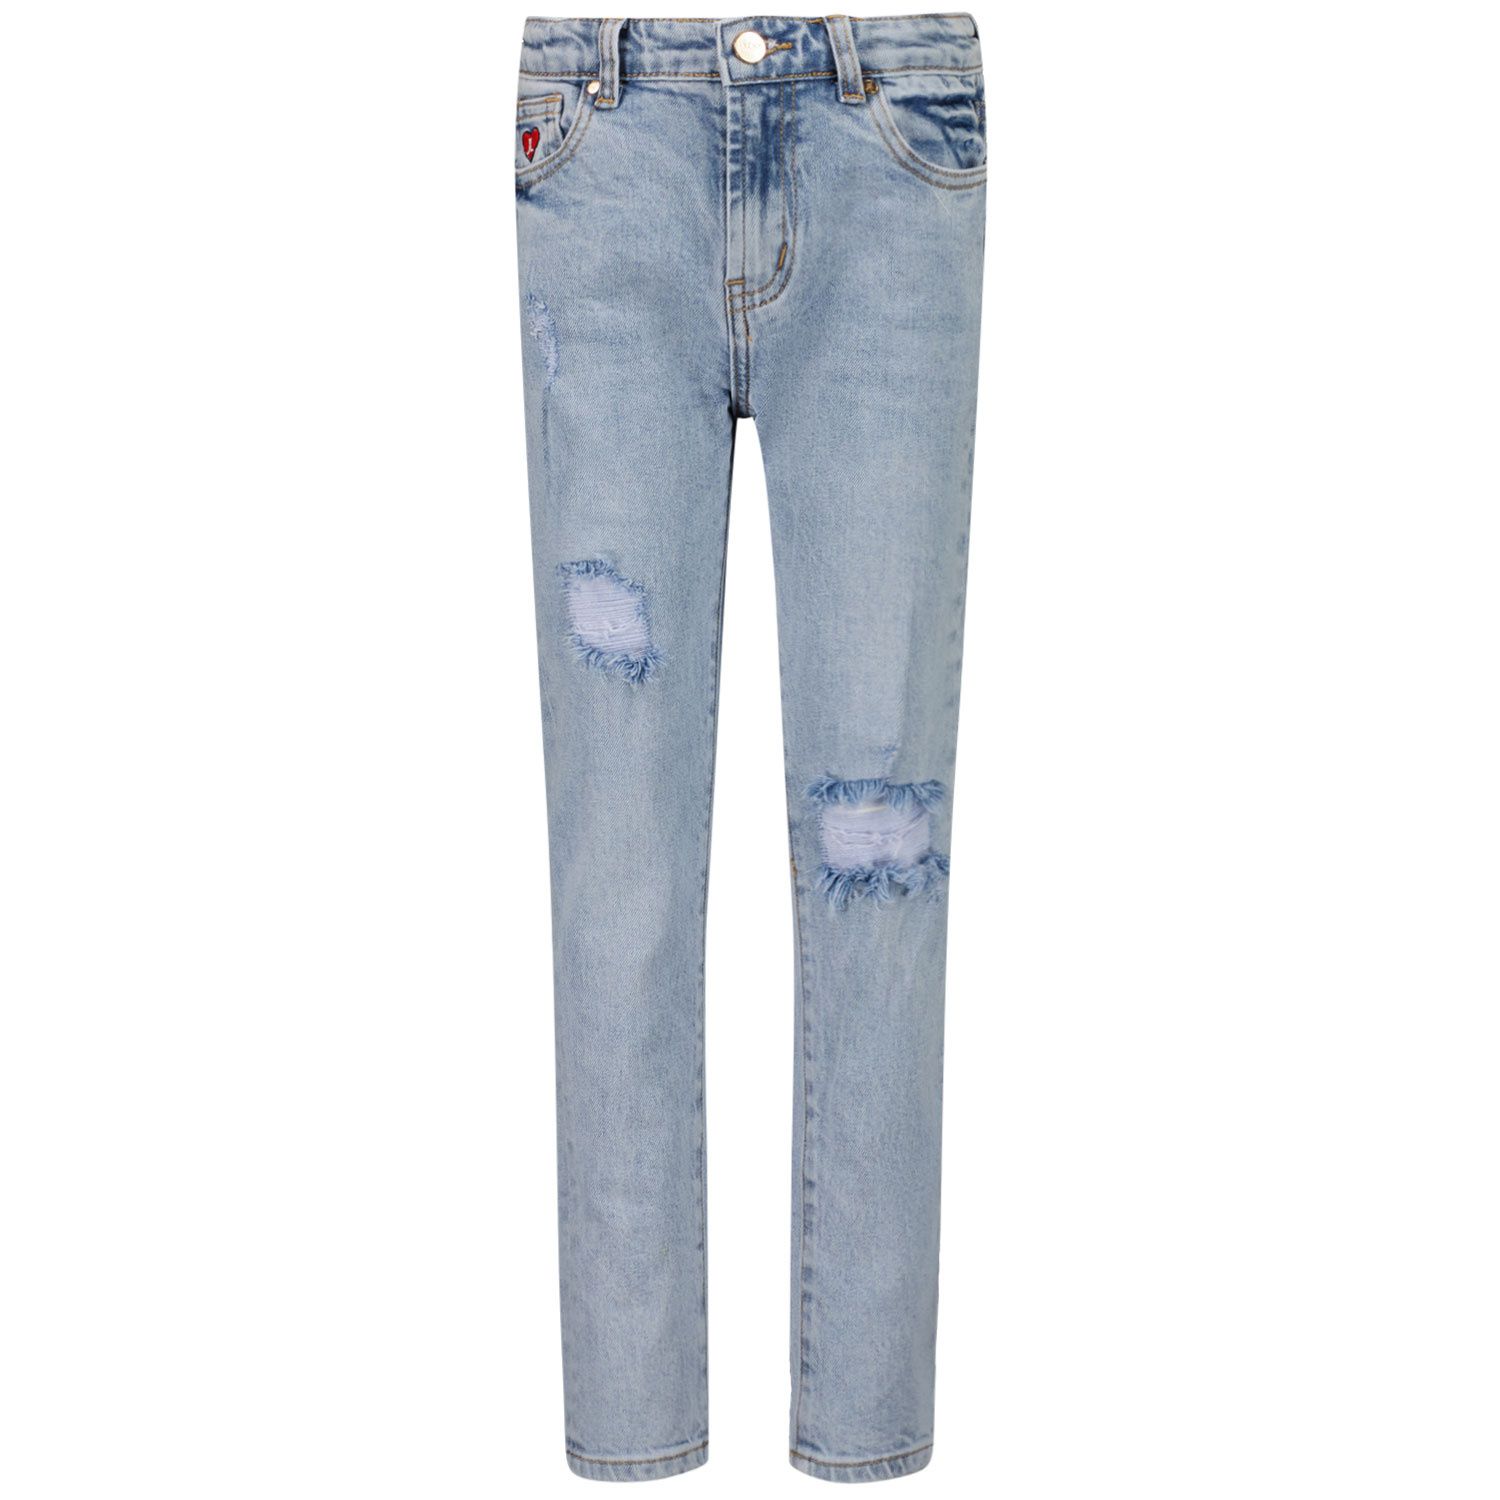 Afbeelding van Jacky Girls JG210311 kinderbroek jeans